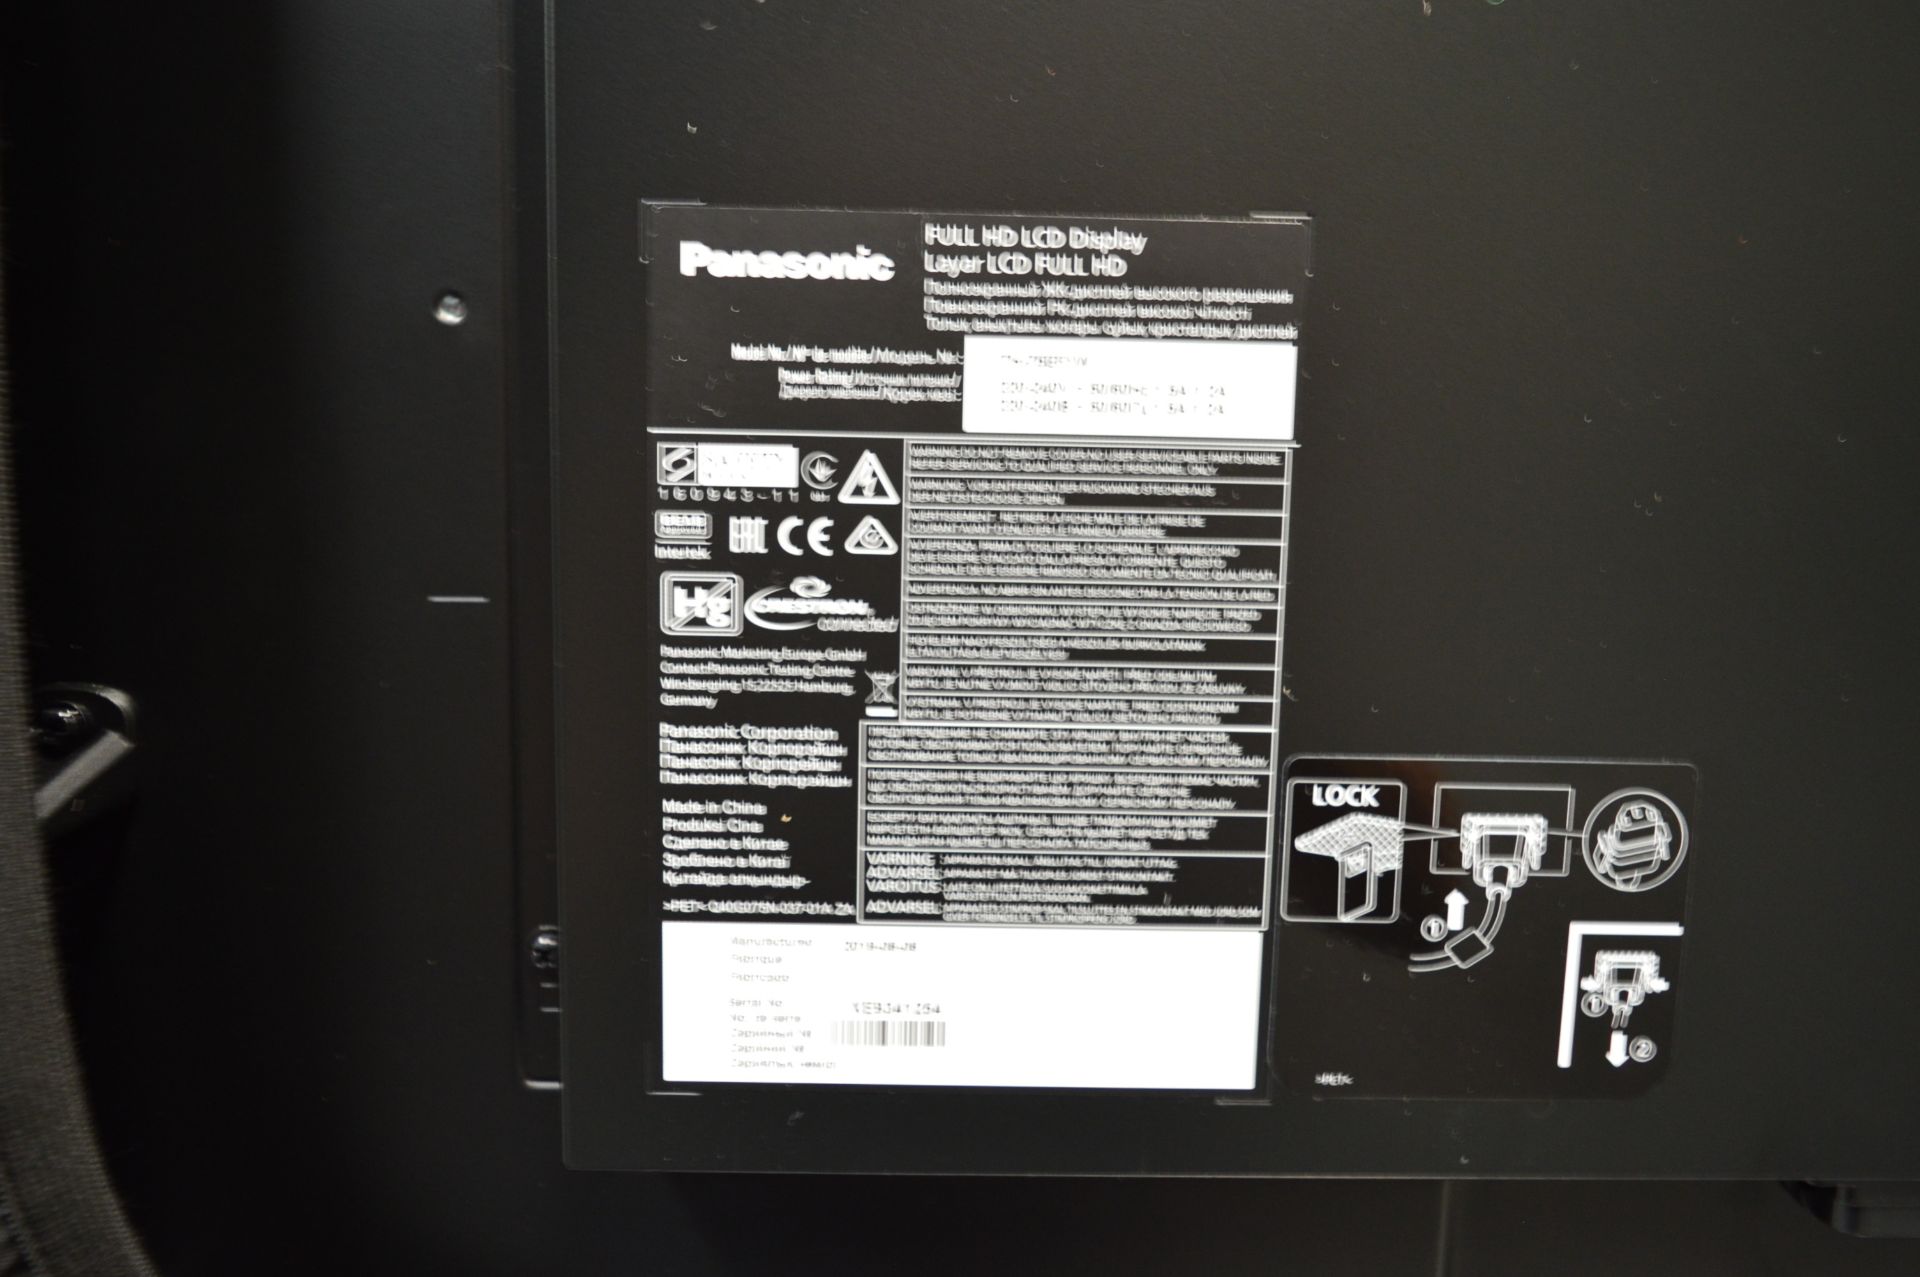 Panasonic, 75" full HD LCD display, Model TH-75EF1 - Image 2 of 4